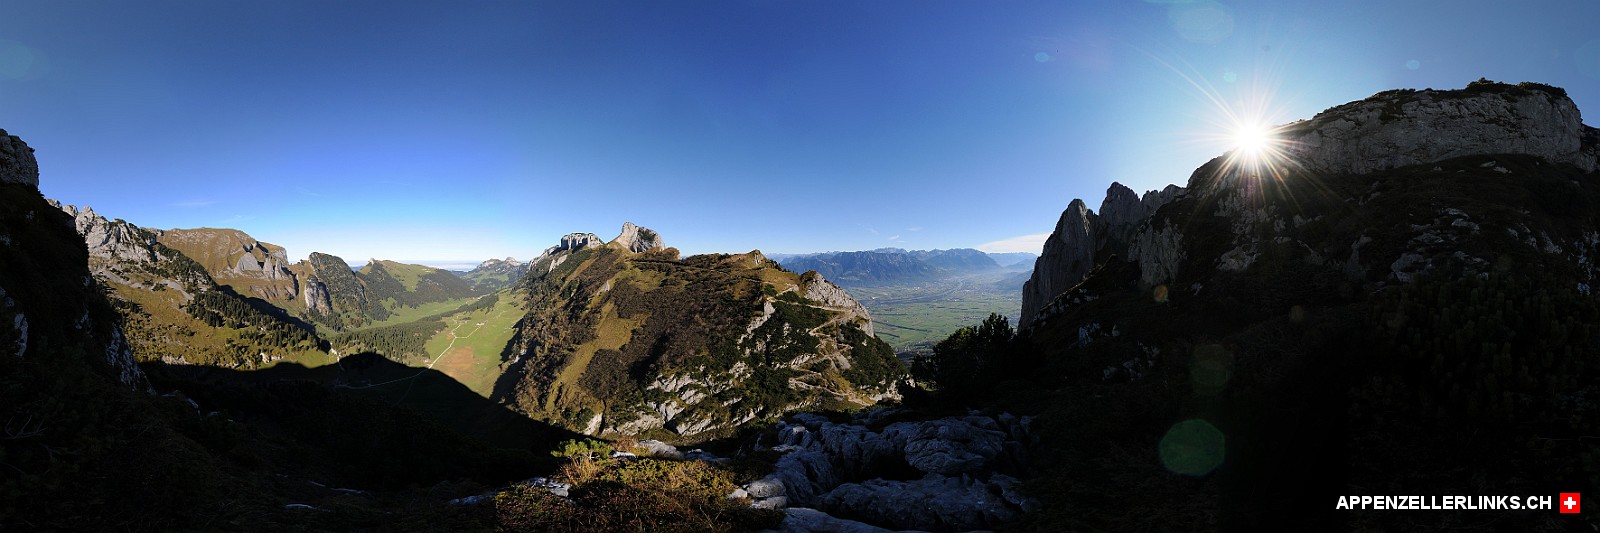 Panorama Saxerfirst-Saxerluecke